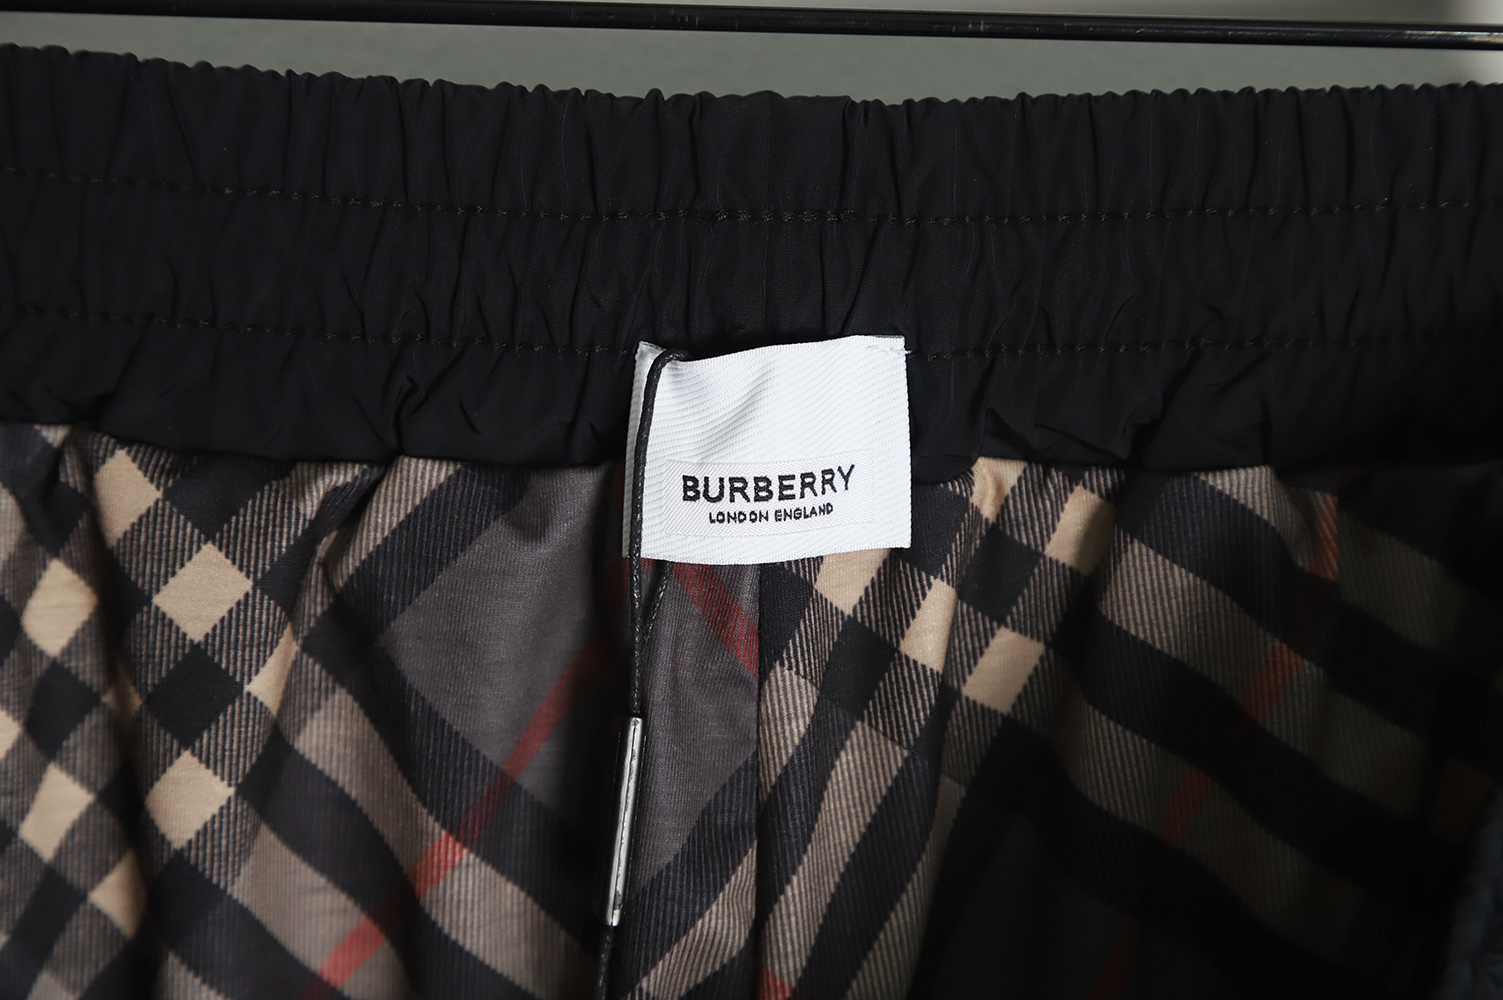 Burberry autumn and winter new waterproof unisex sweatpants